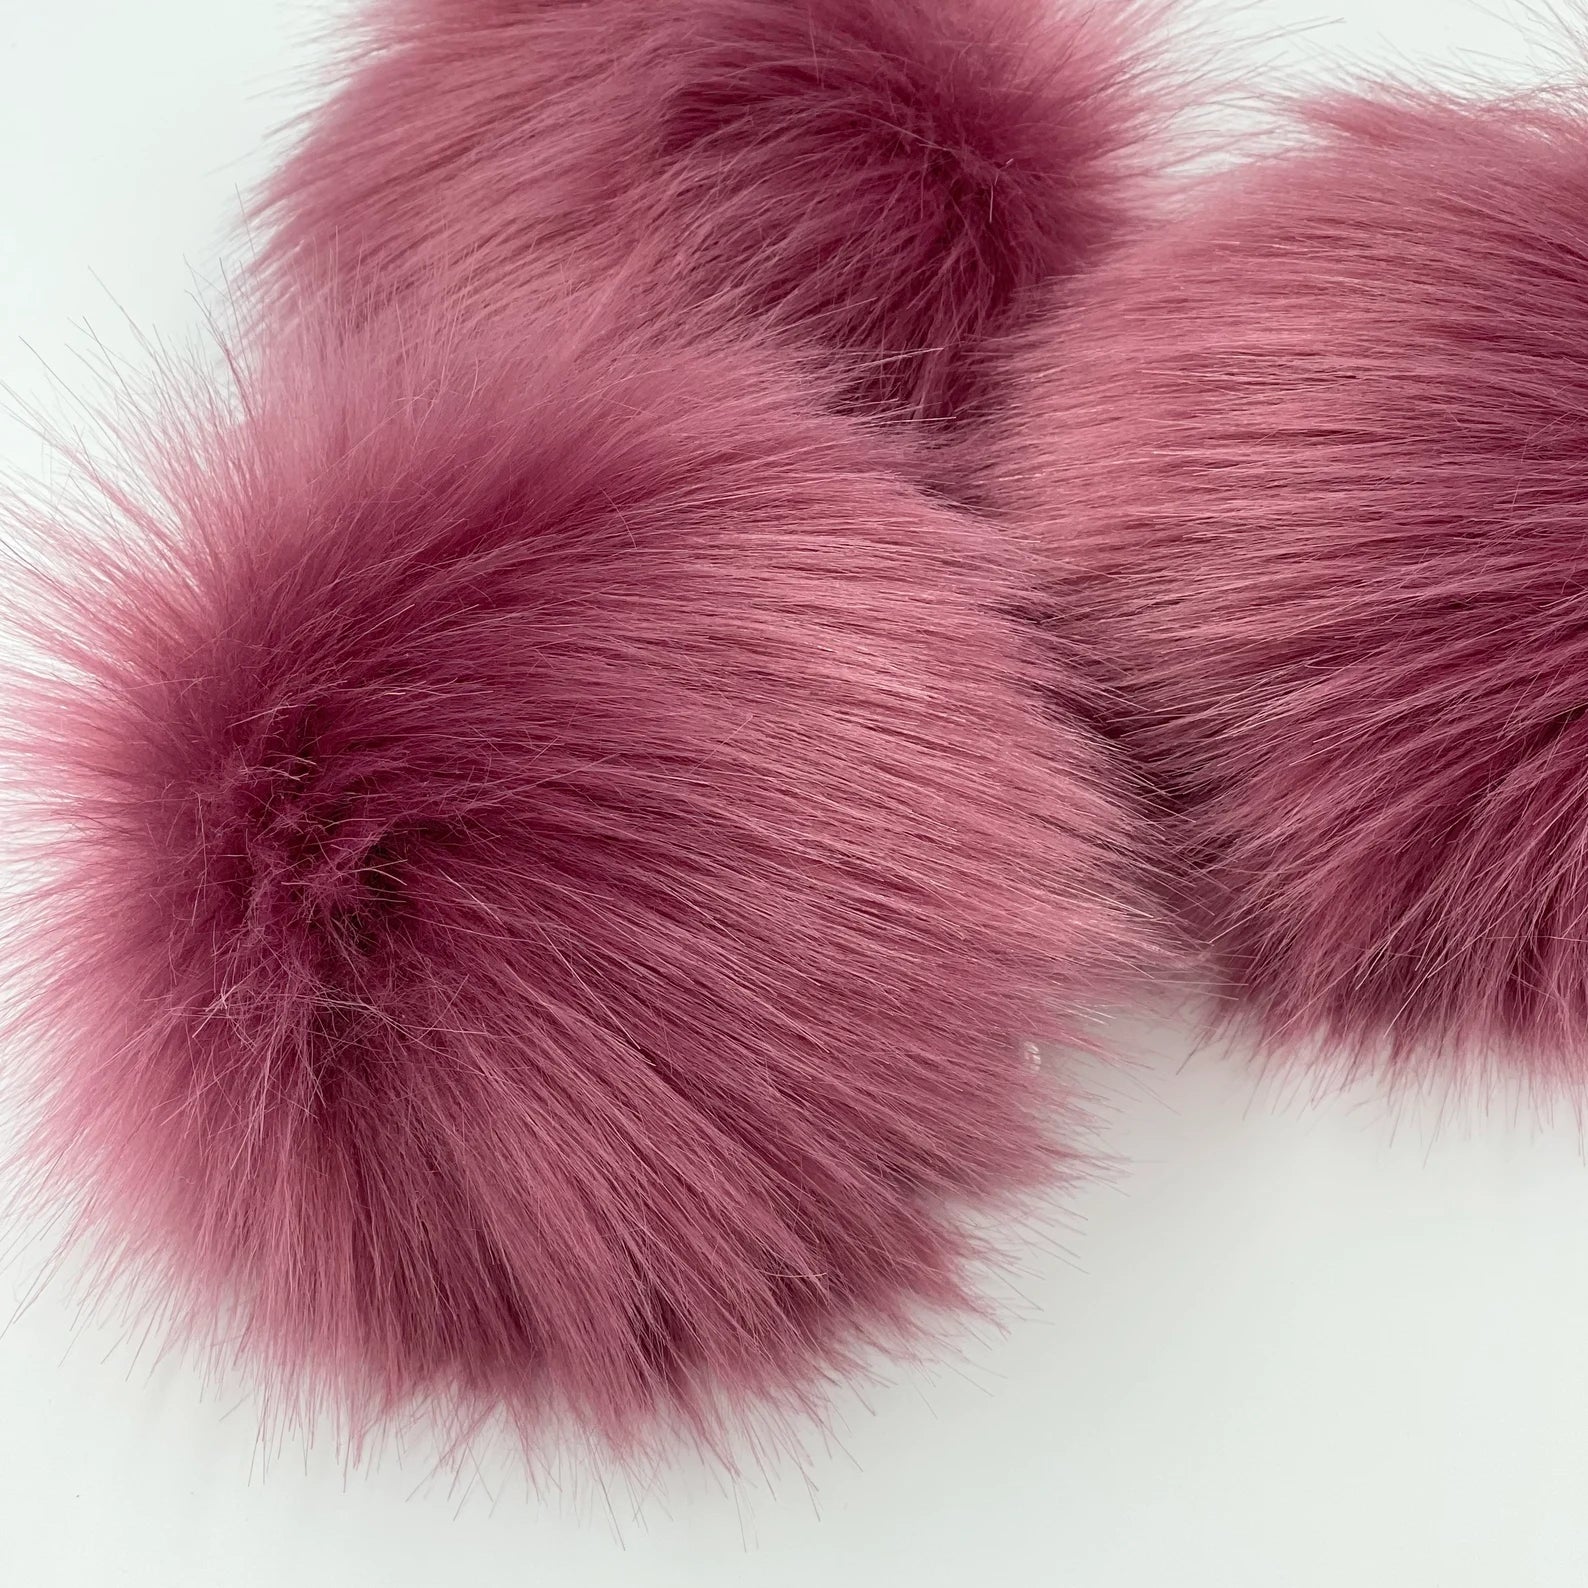 Faux Fur Pom Poms - Dusty Rose - LovelyLoopsDesigns - New - The Little Yarn Store